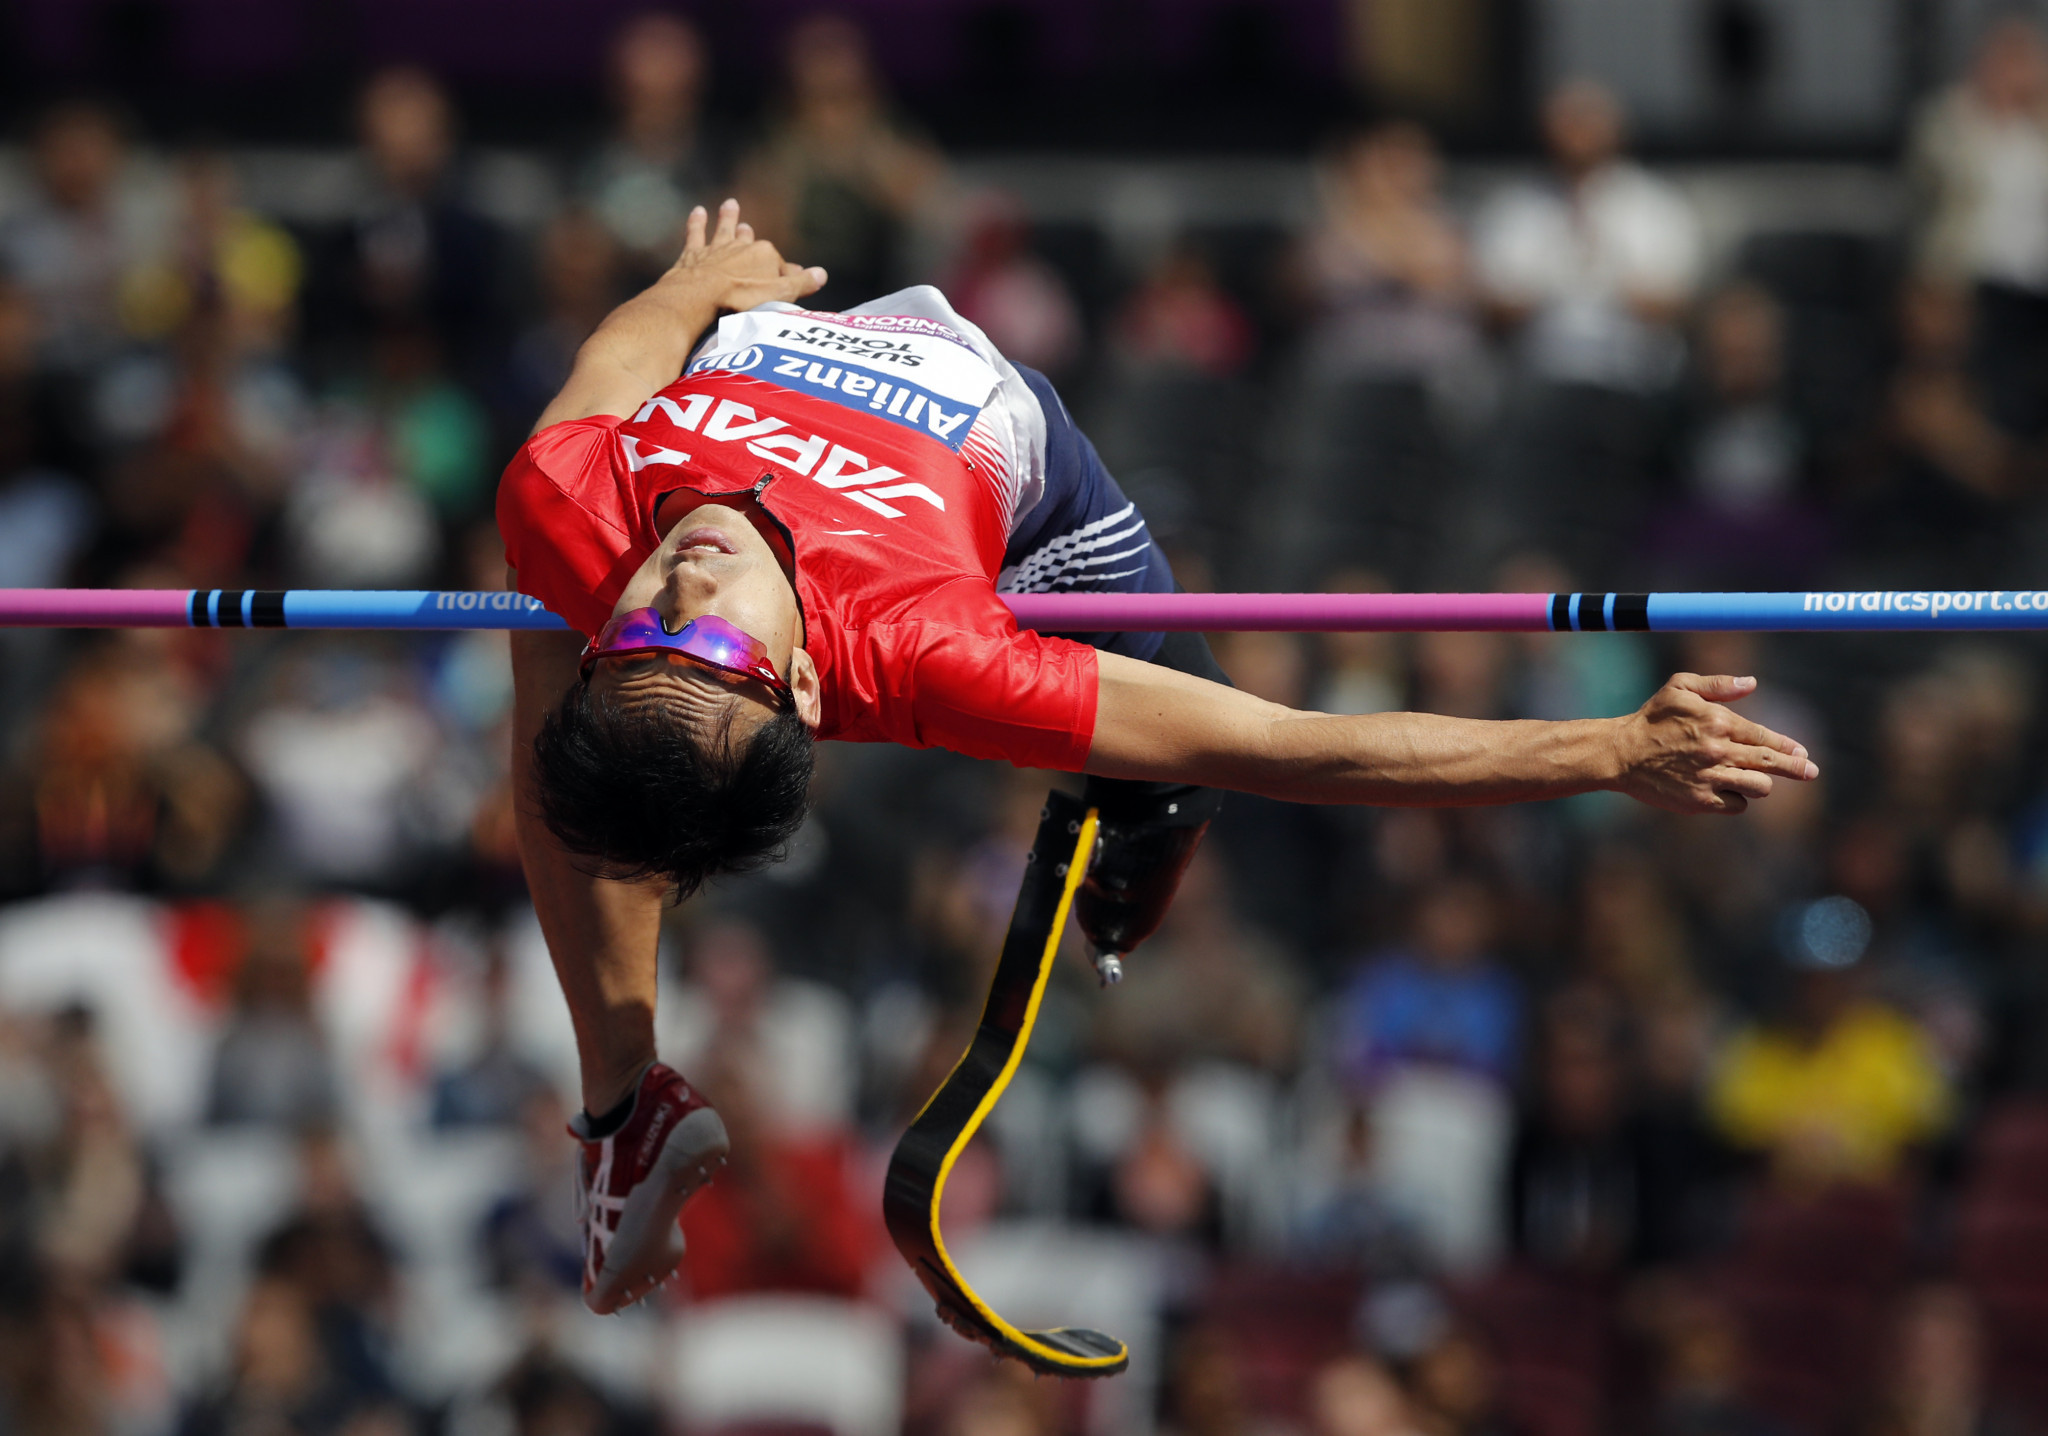 Japan's Toru Suzuki broke the men's high jump T64 world record ©Getty Images